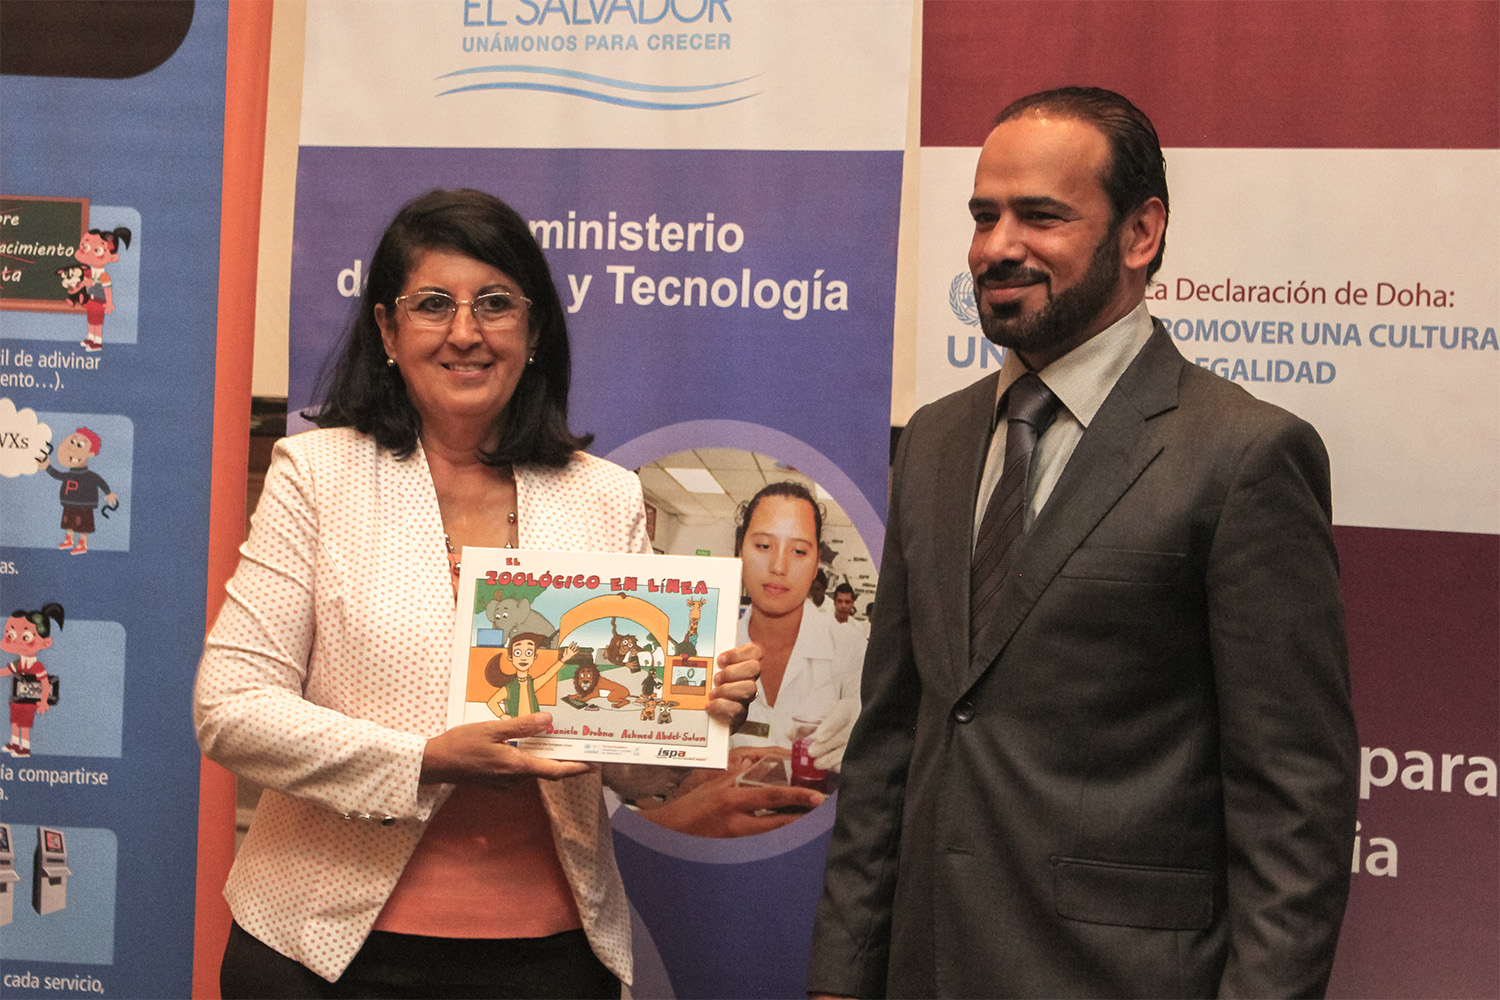 E4J materials: an integral part of El Salvador’s national school campaign on cybercrime prevention